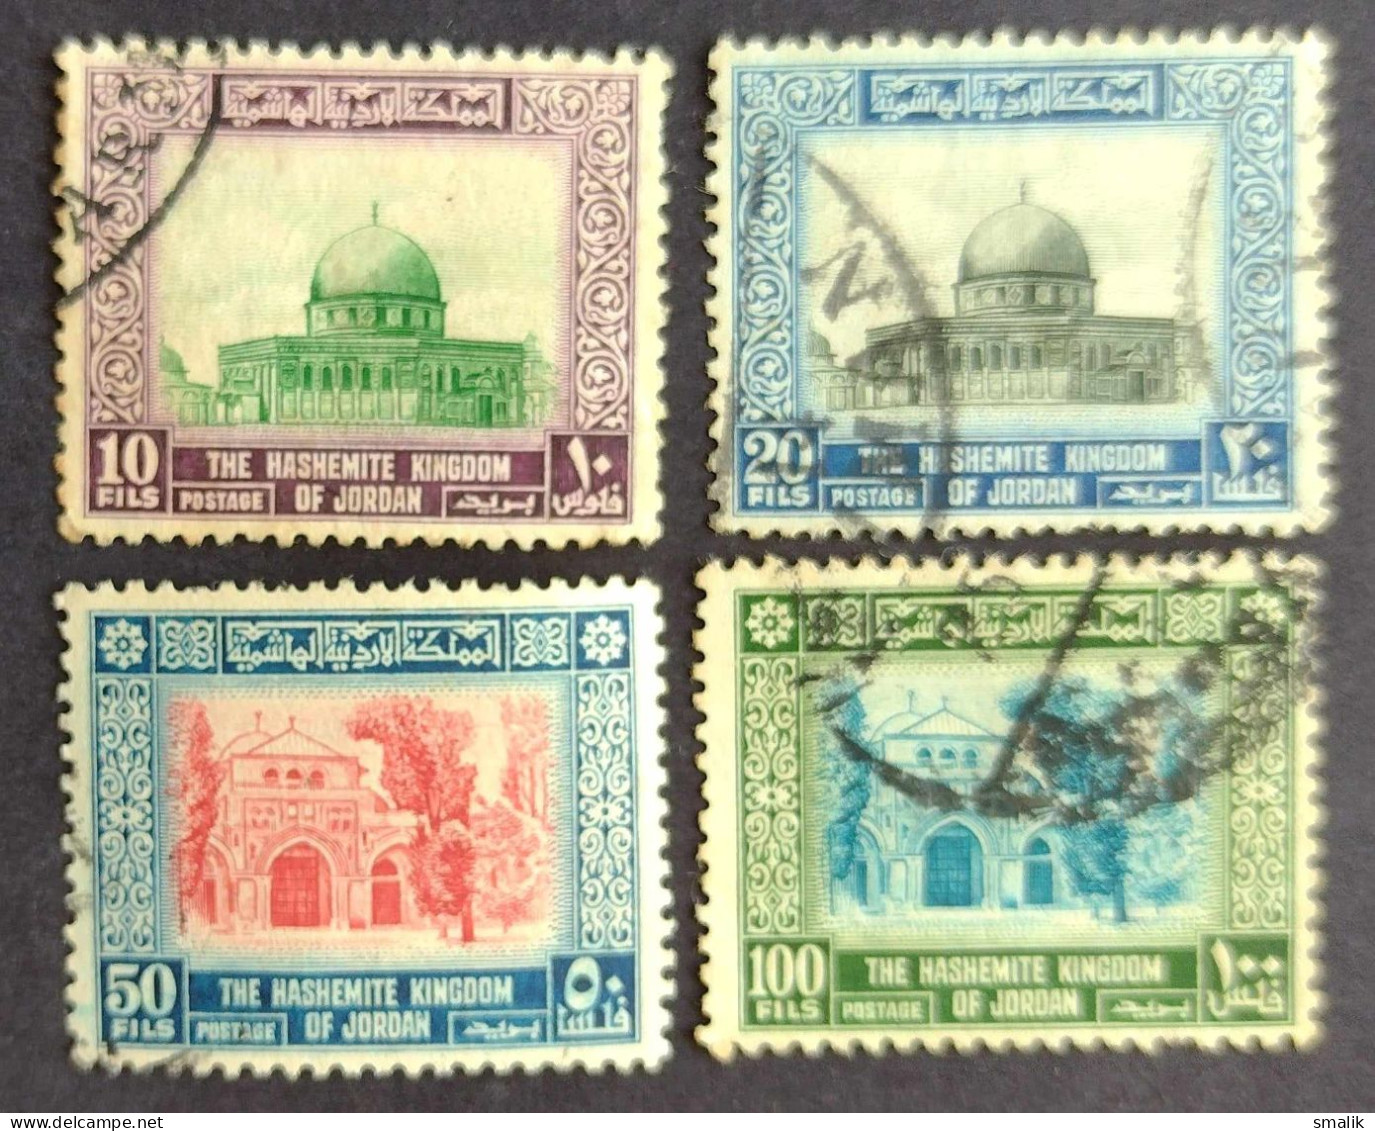 JORDAN - Mosques Old Definitive 4 Stamps, Good Used - Jordanien